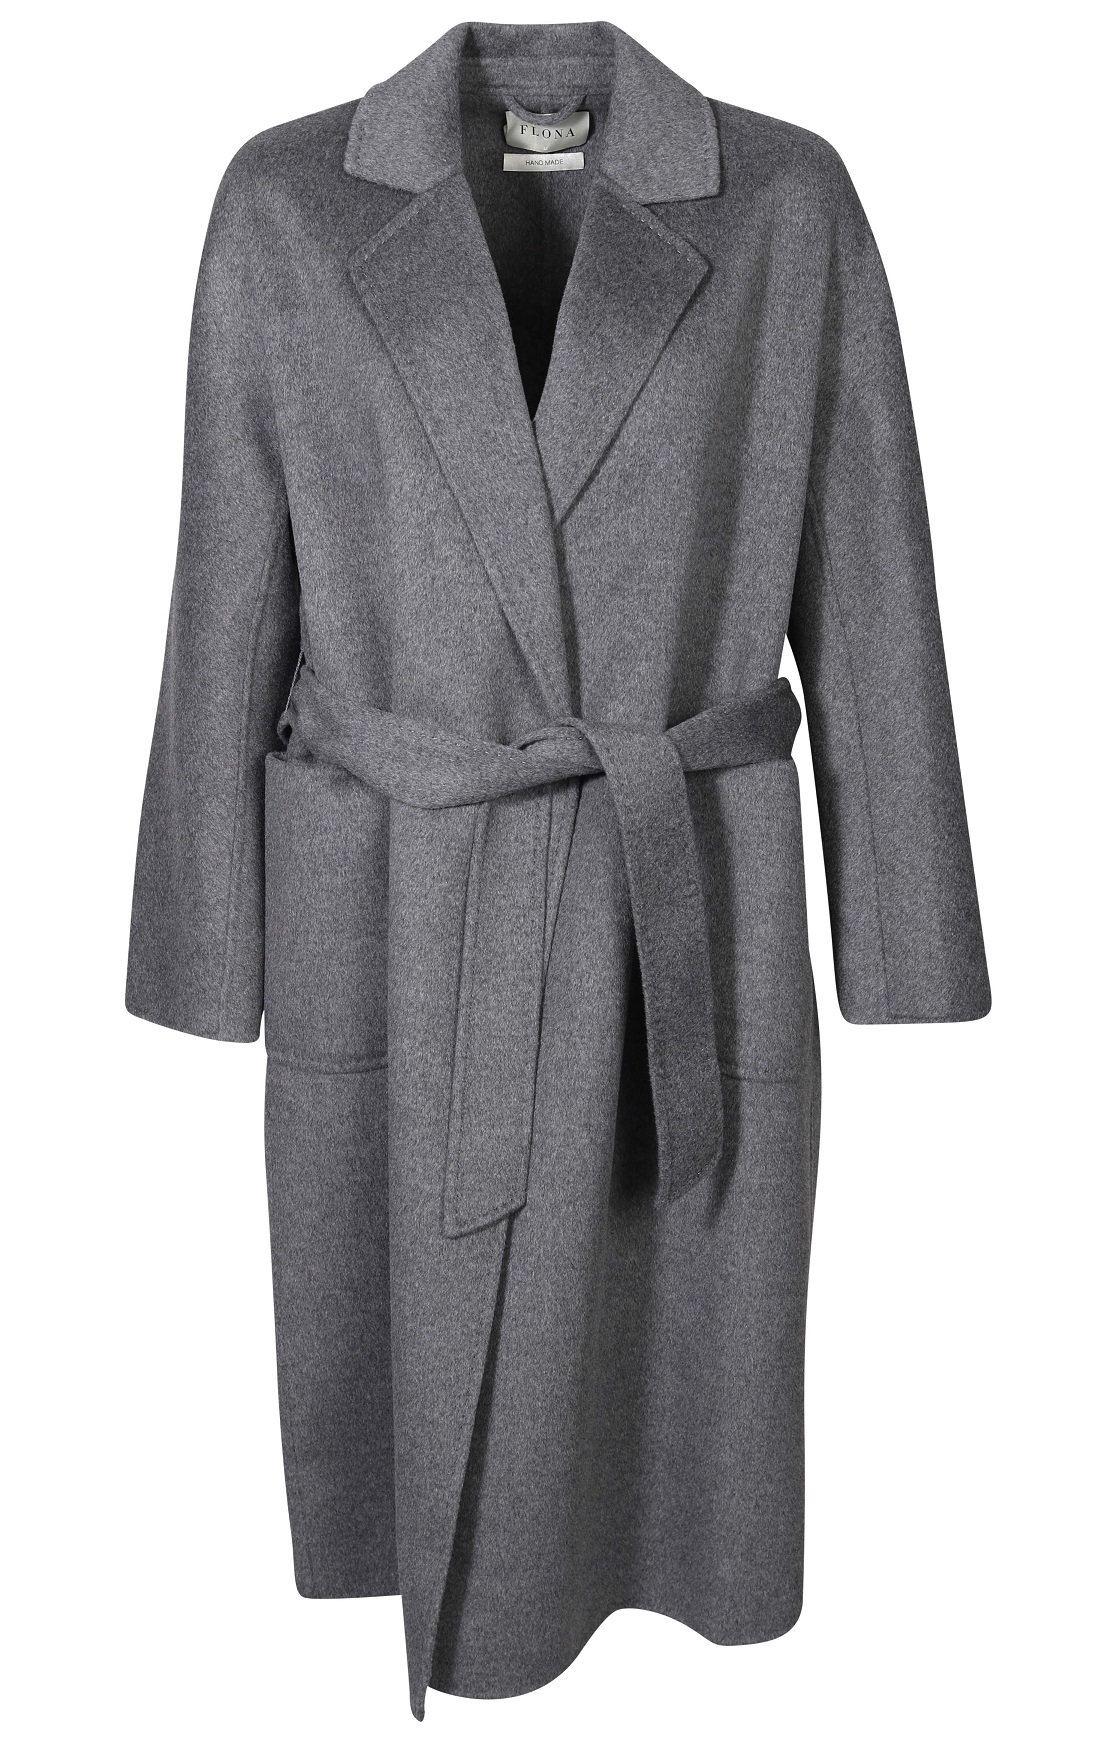 FLONA Wool/Cashmere Coat in Anthrazit M